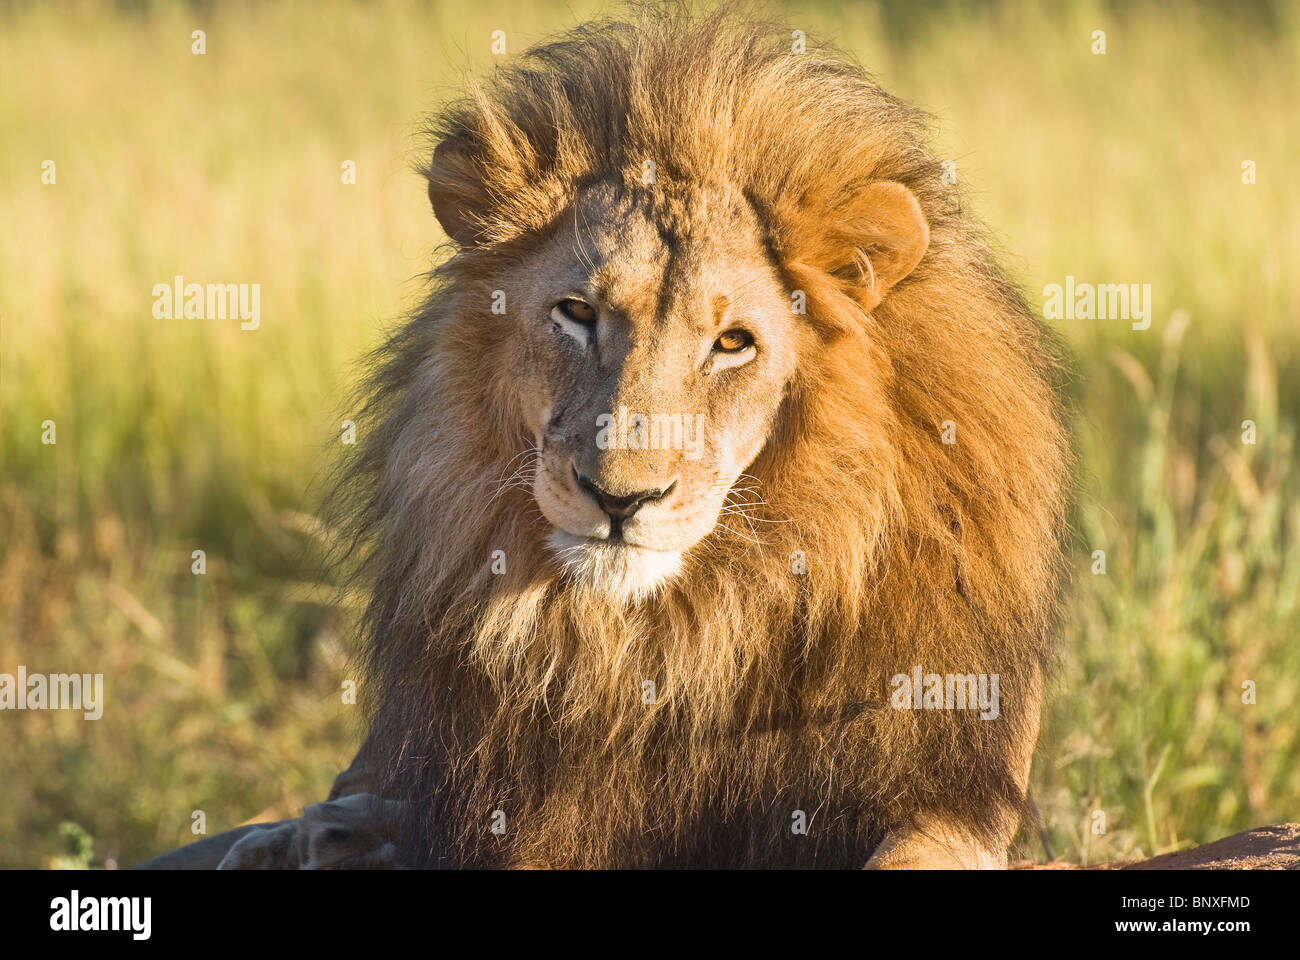 Lion (Panthera leo) - single adult male resting in close-up with eye contact - Okonjima, Damaraland, Namibia, Southern Africa Stock Photo